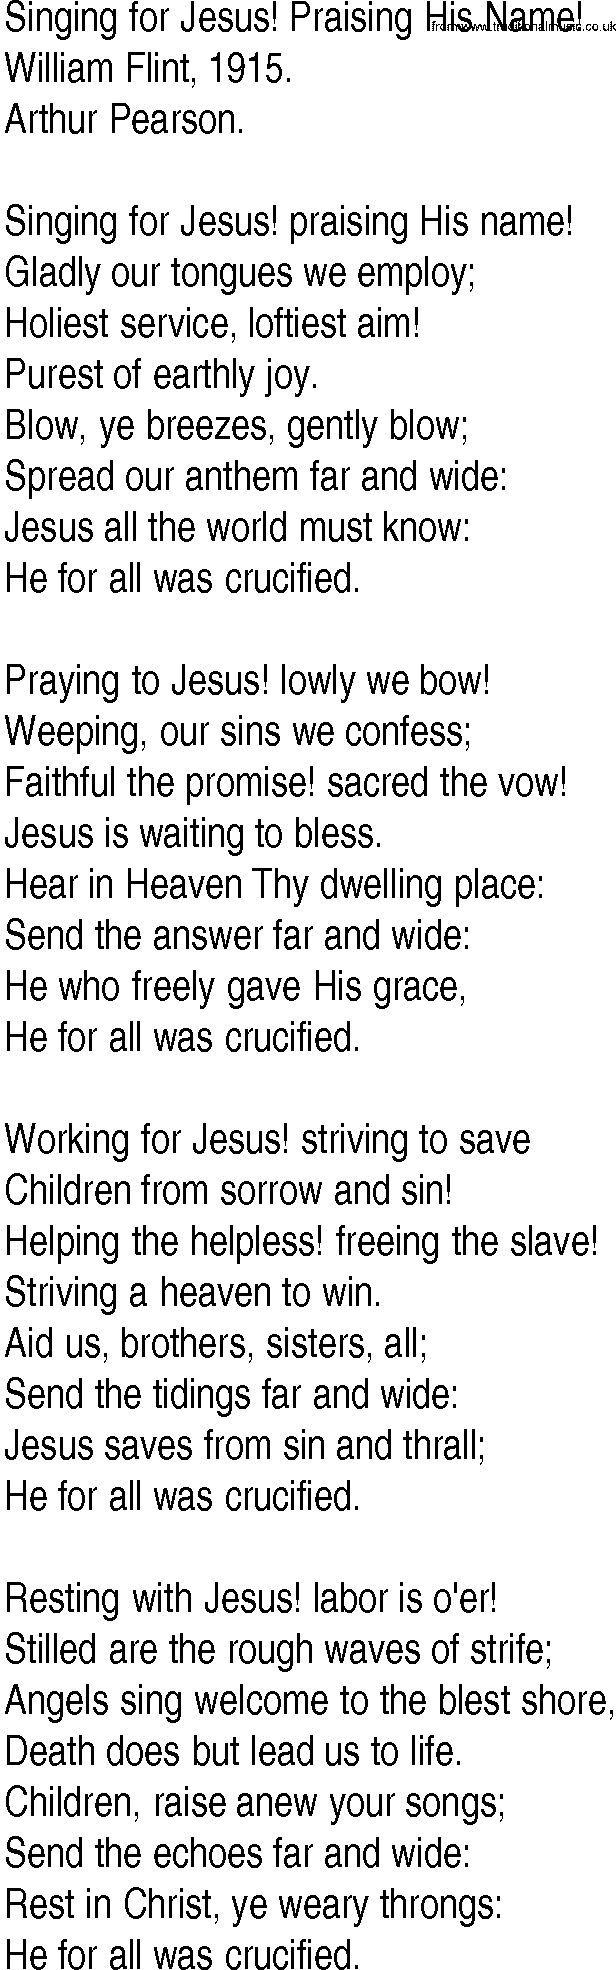 Hymn and Gospel Song: Singing for Jesus! Praising His Name! by William Flint lyrics